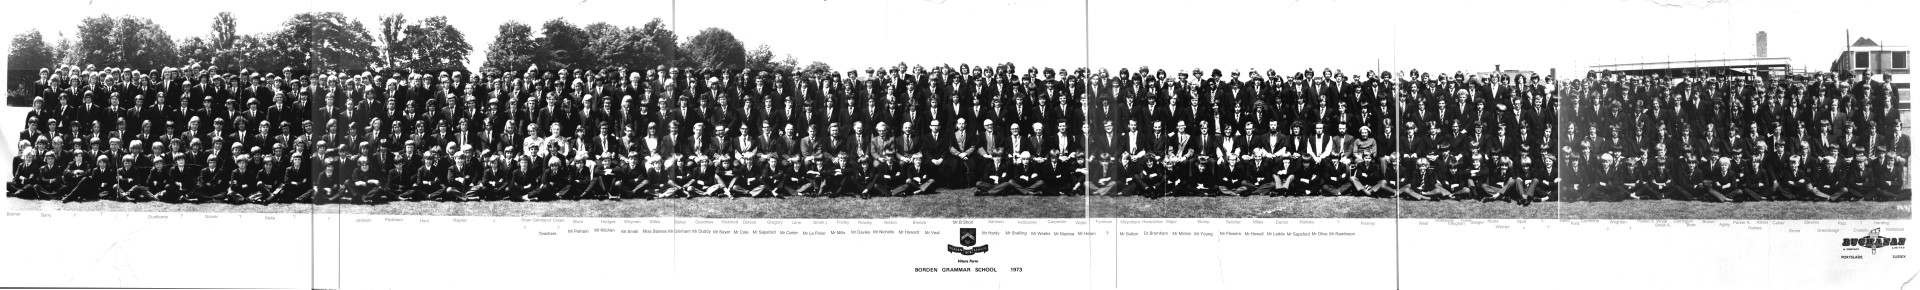 BGS School Photo 1973 Large